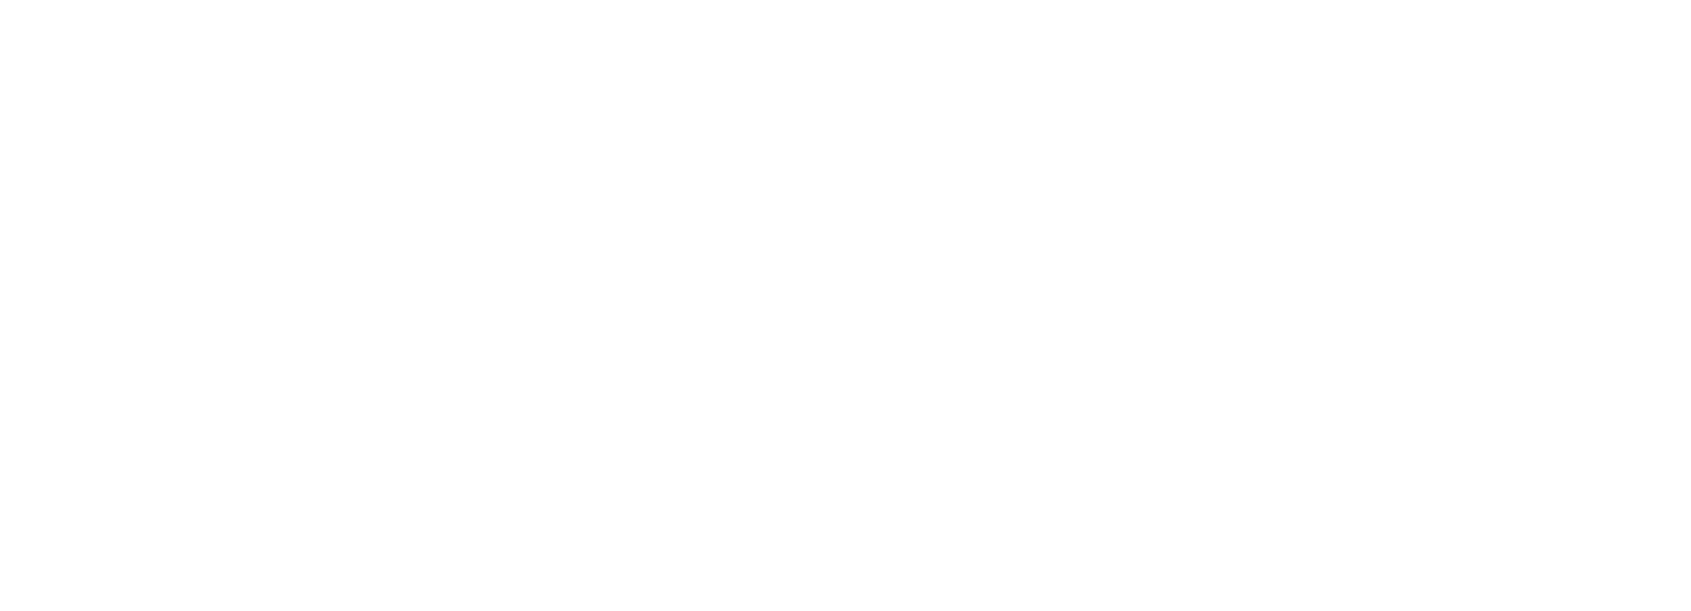 Barkshire Dog Trading Company Vintage Logo 01